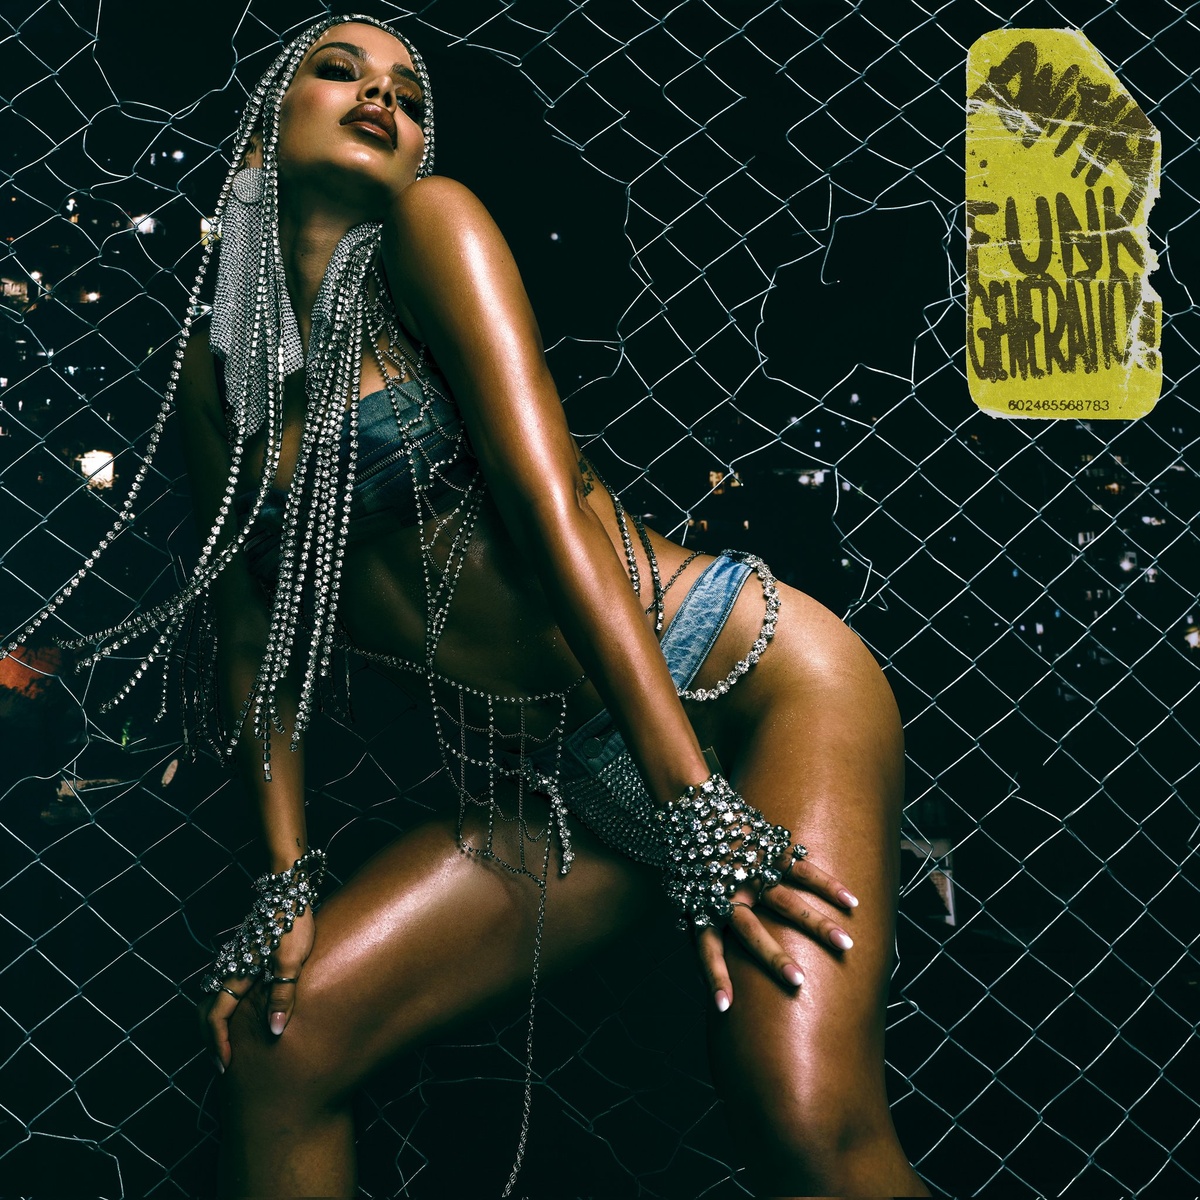 Capa do sexto álbum de estúdio de Anitta, “Funk Generation”